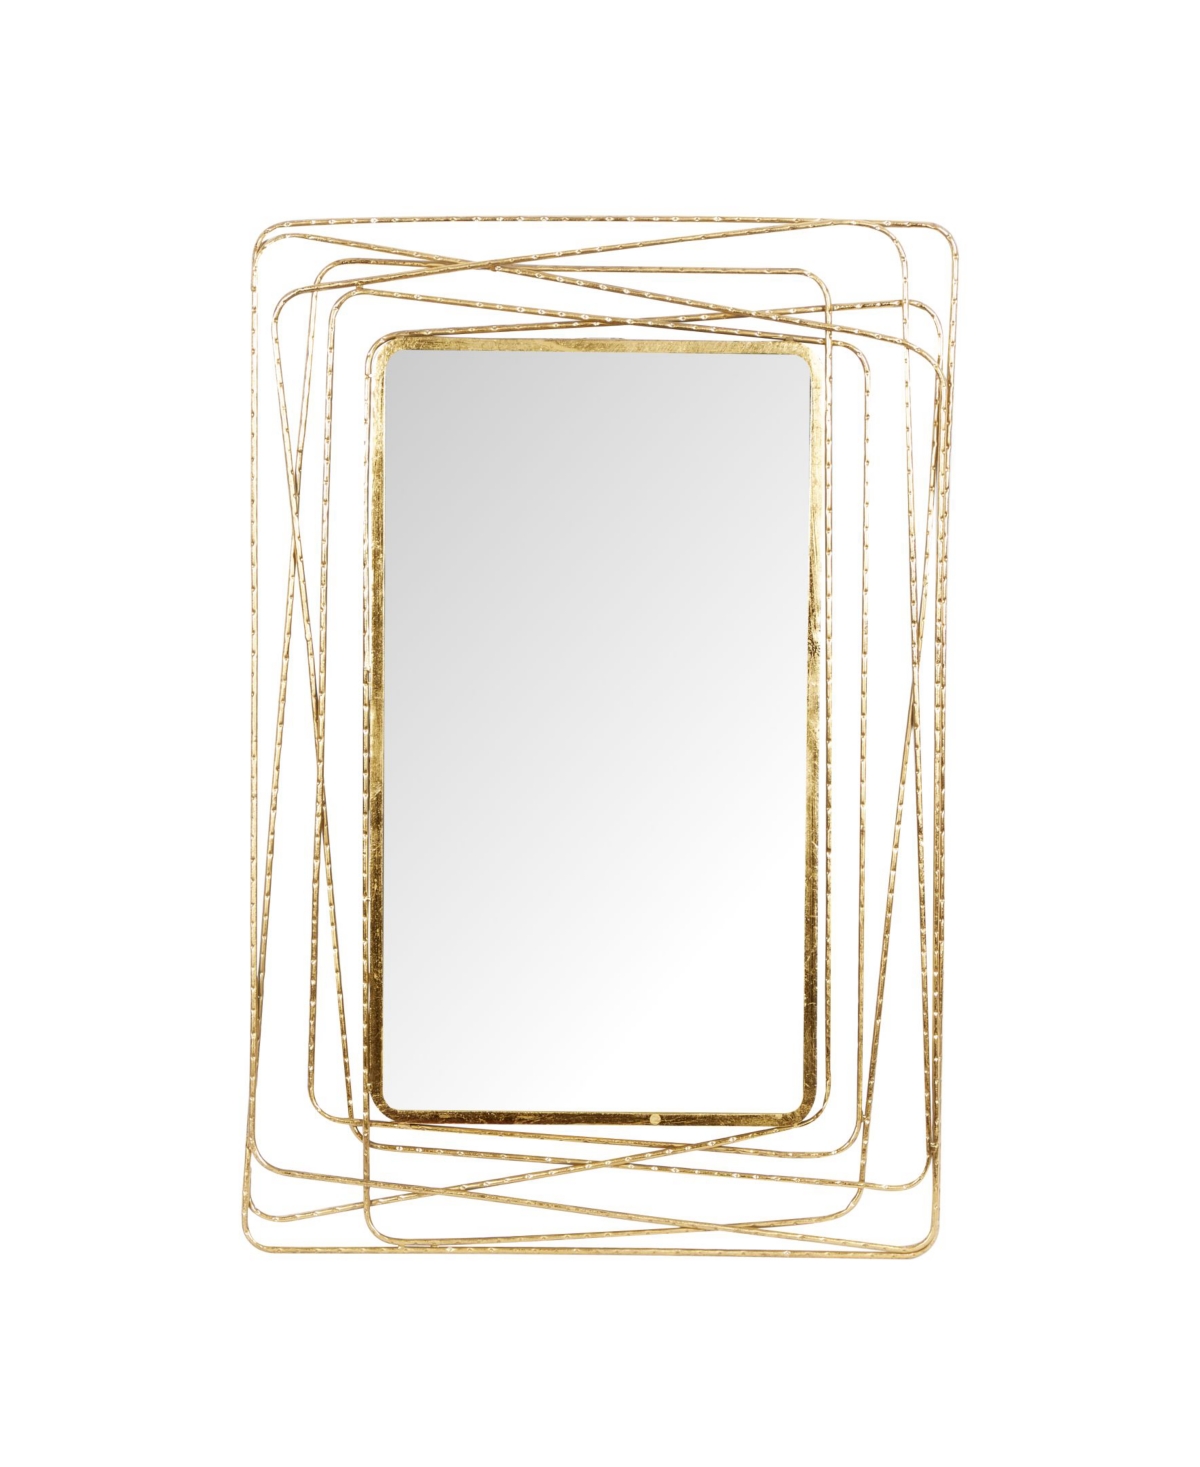 Metal Contemporary Wall Mirror, 47" x 31" - Gold-Tone